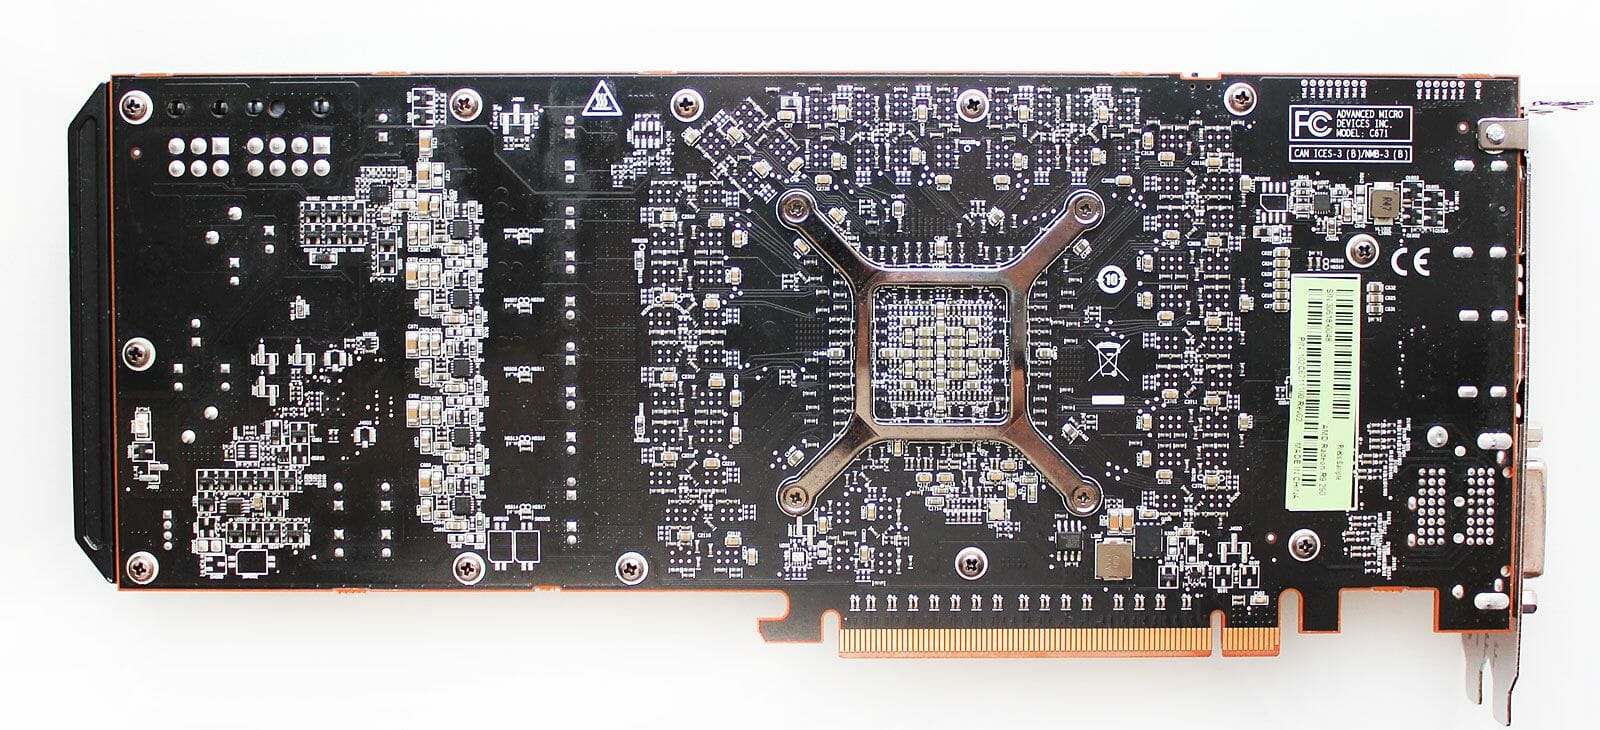 3 AMD Radeon R9 290 pins